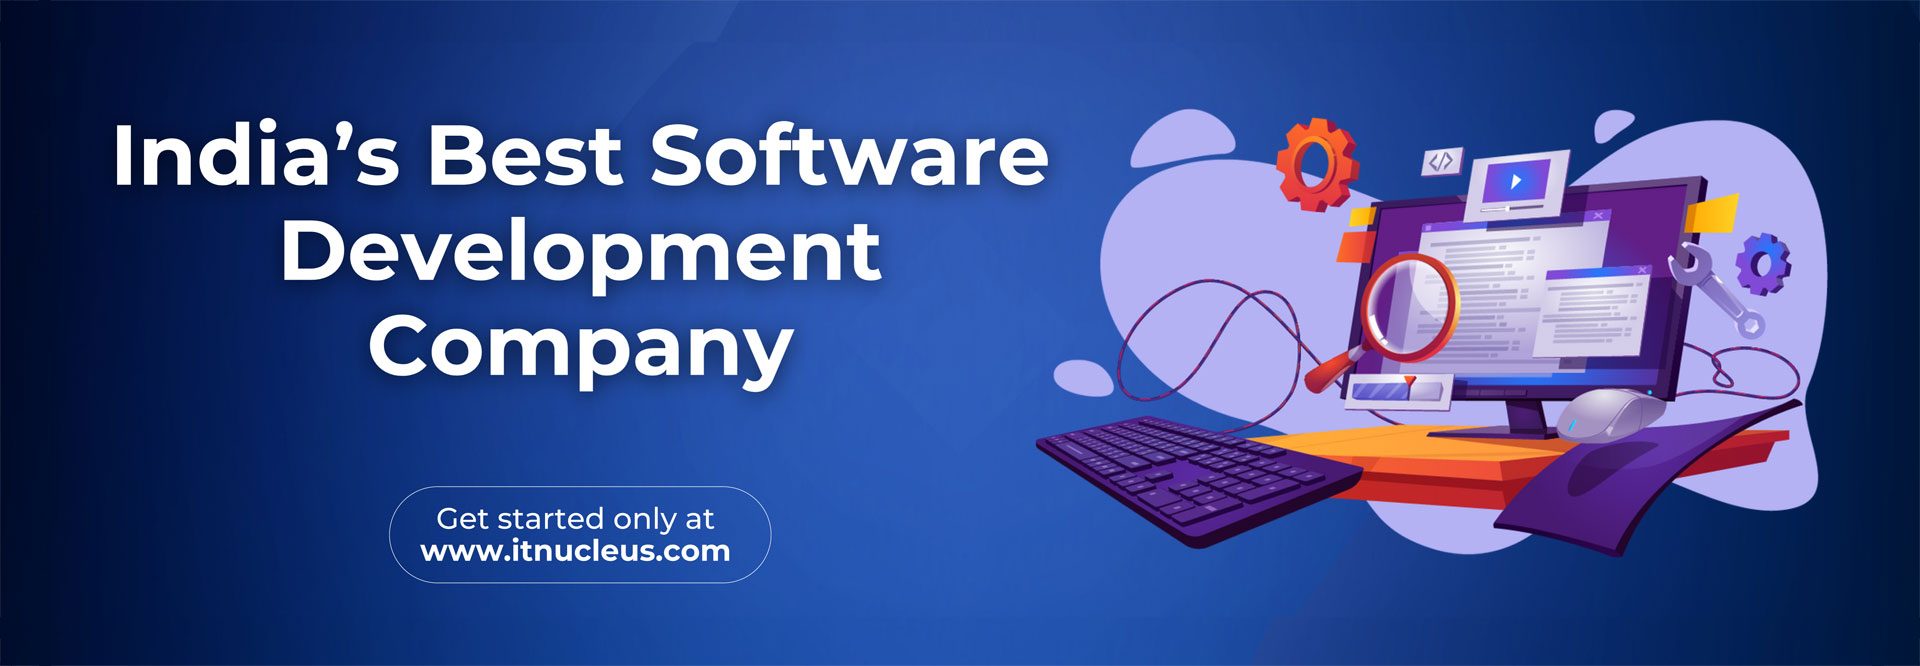 India’s Best Software Development Company